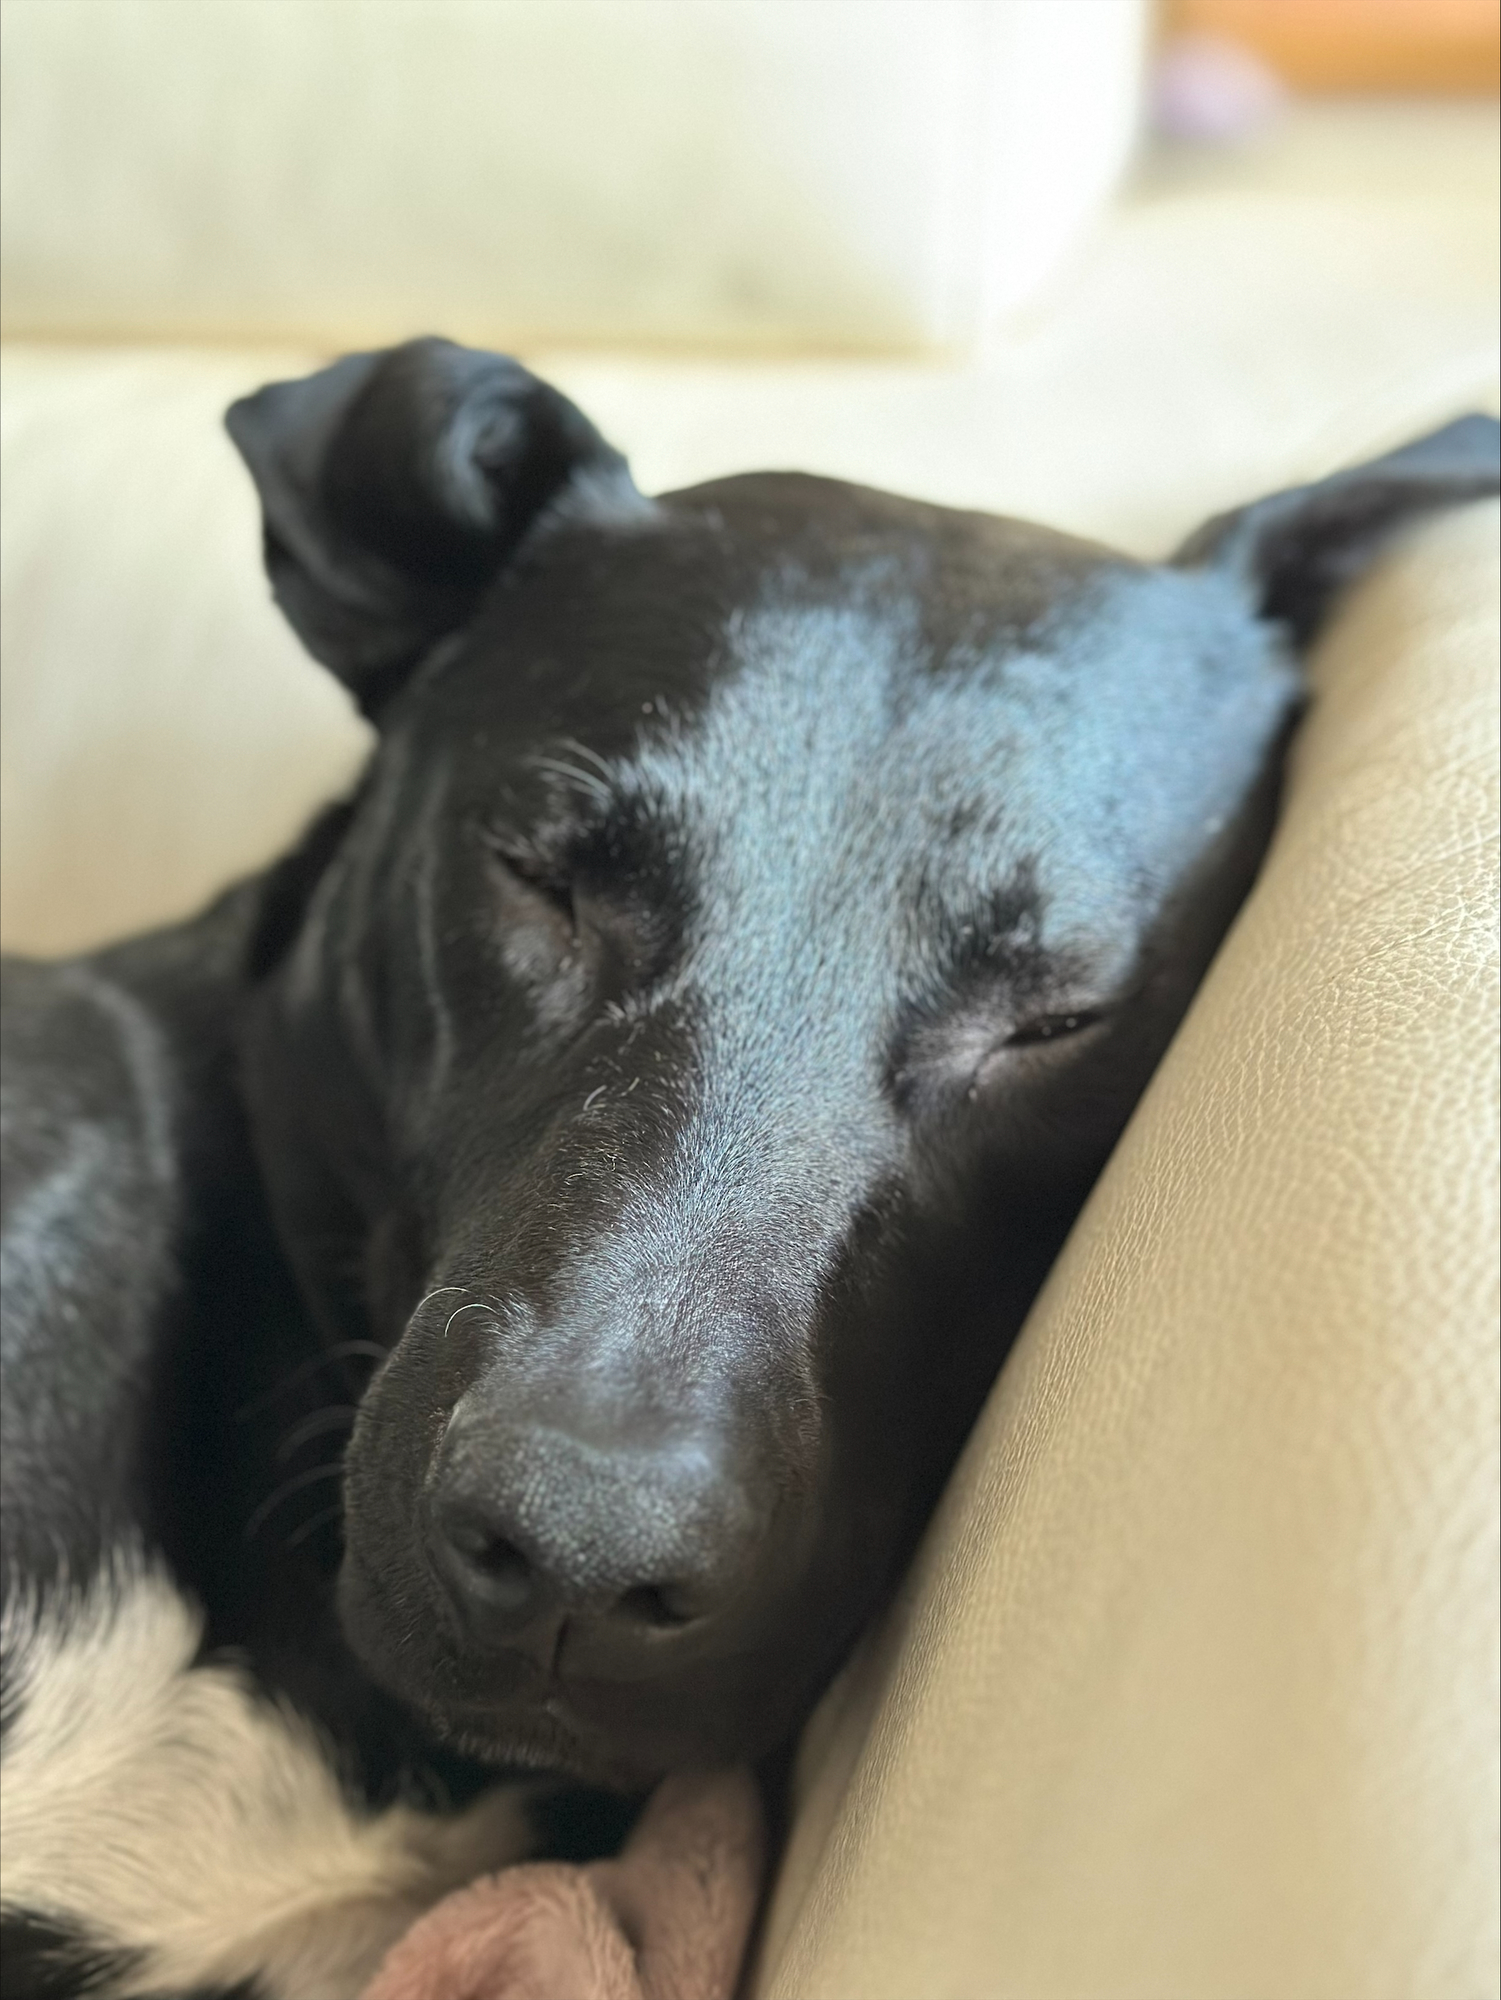 A big black dog sleeps on a couch